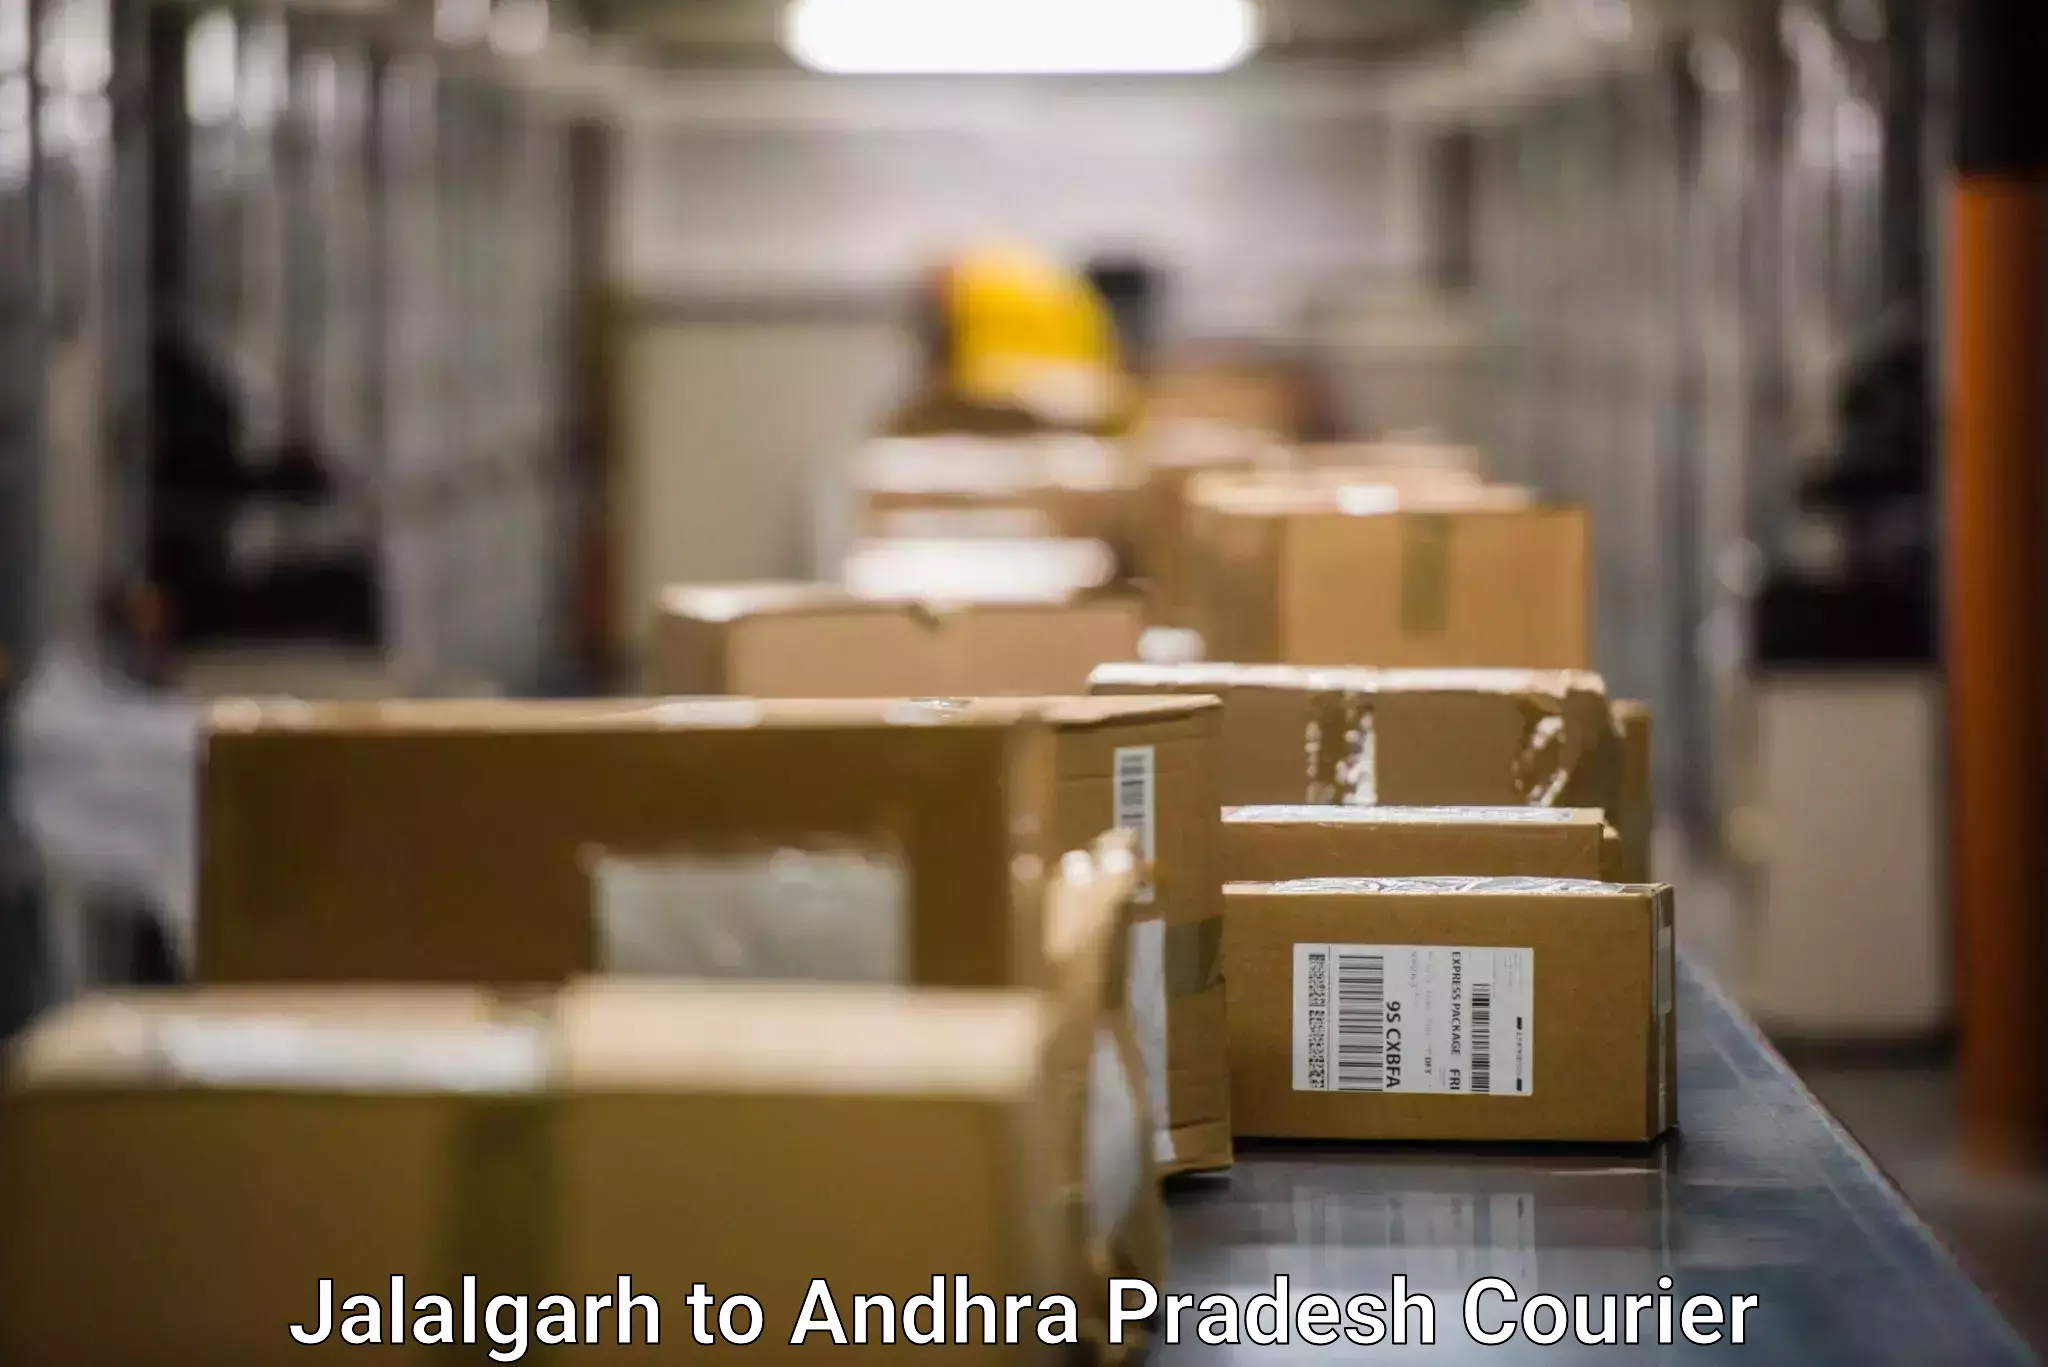 Personalized courier experiences Jalalgarh to Tripuranthakam